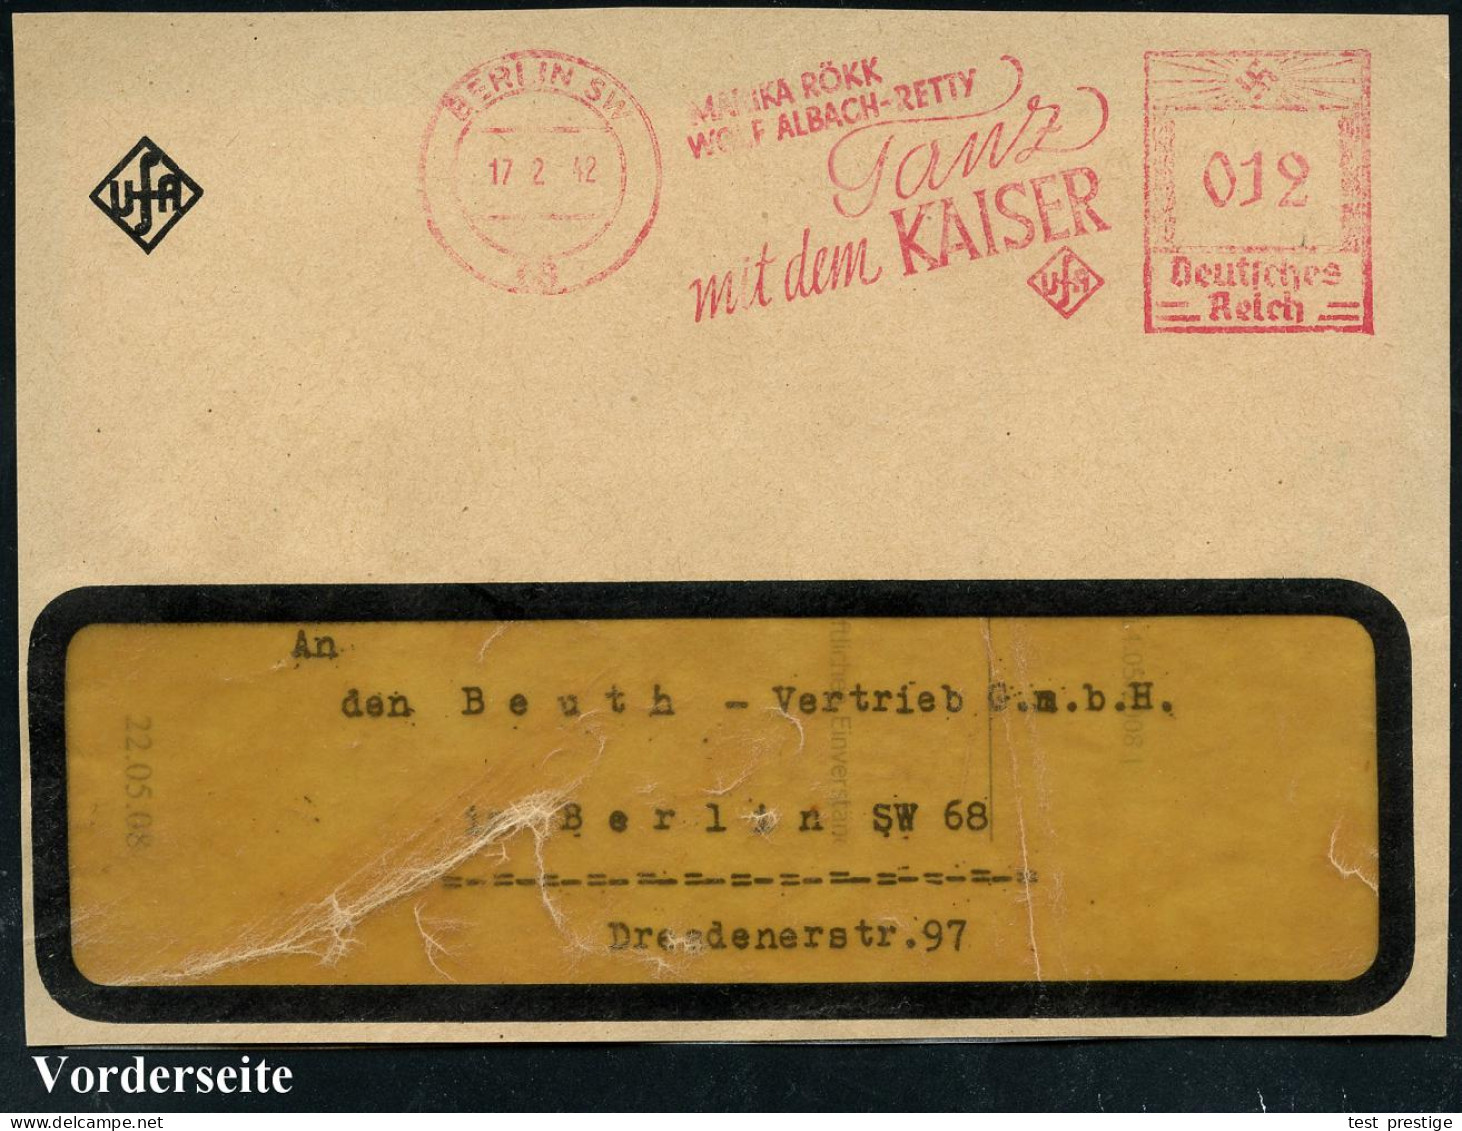 BERLIN SW 68/ MARIKA RÖKK/ W.ALBACH-RETTY/ Tanz/ Mit Dem KAISER/ UfA 1942 (17.2.) Seltener AFS Francotyp = Film über Kai - Baile